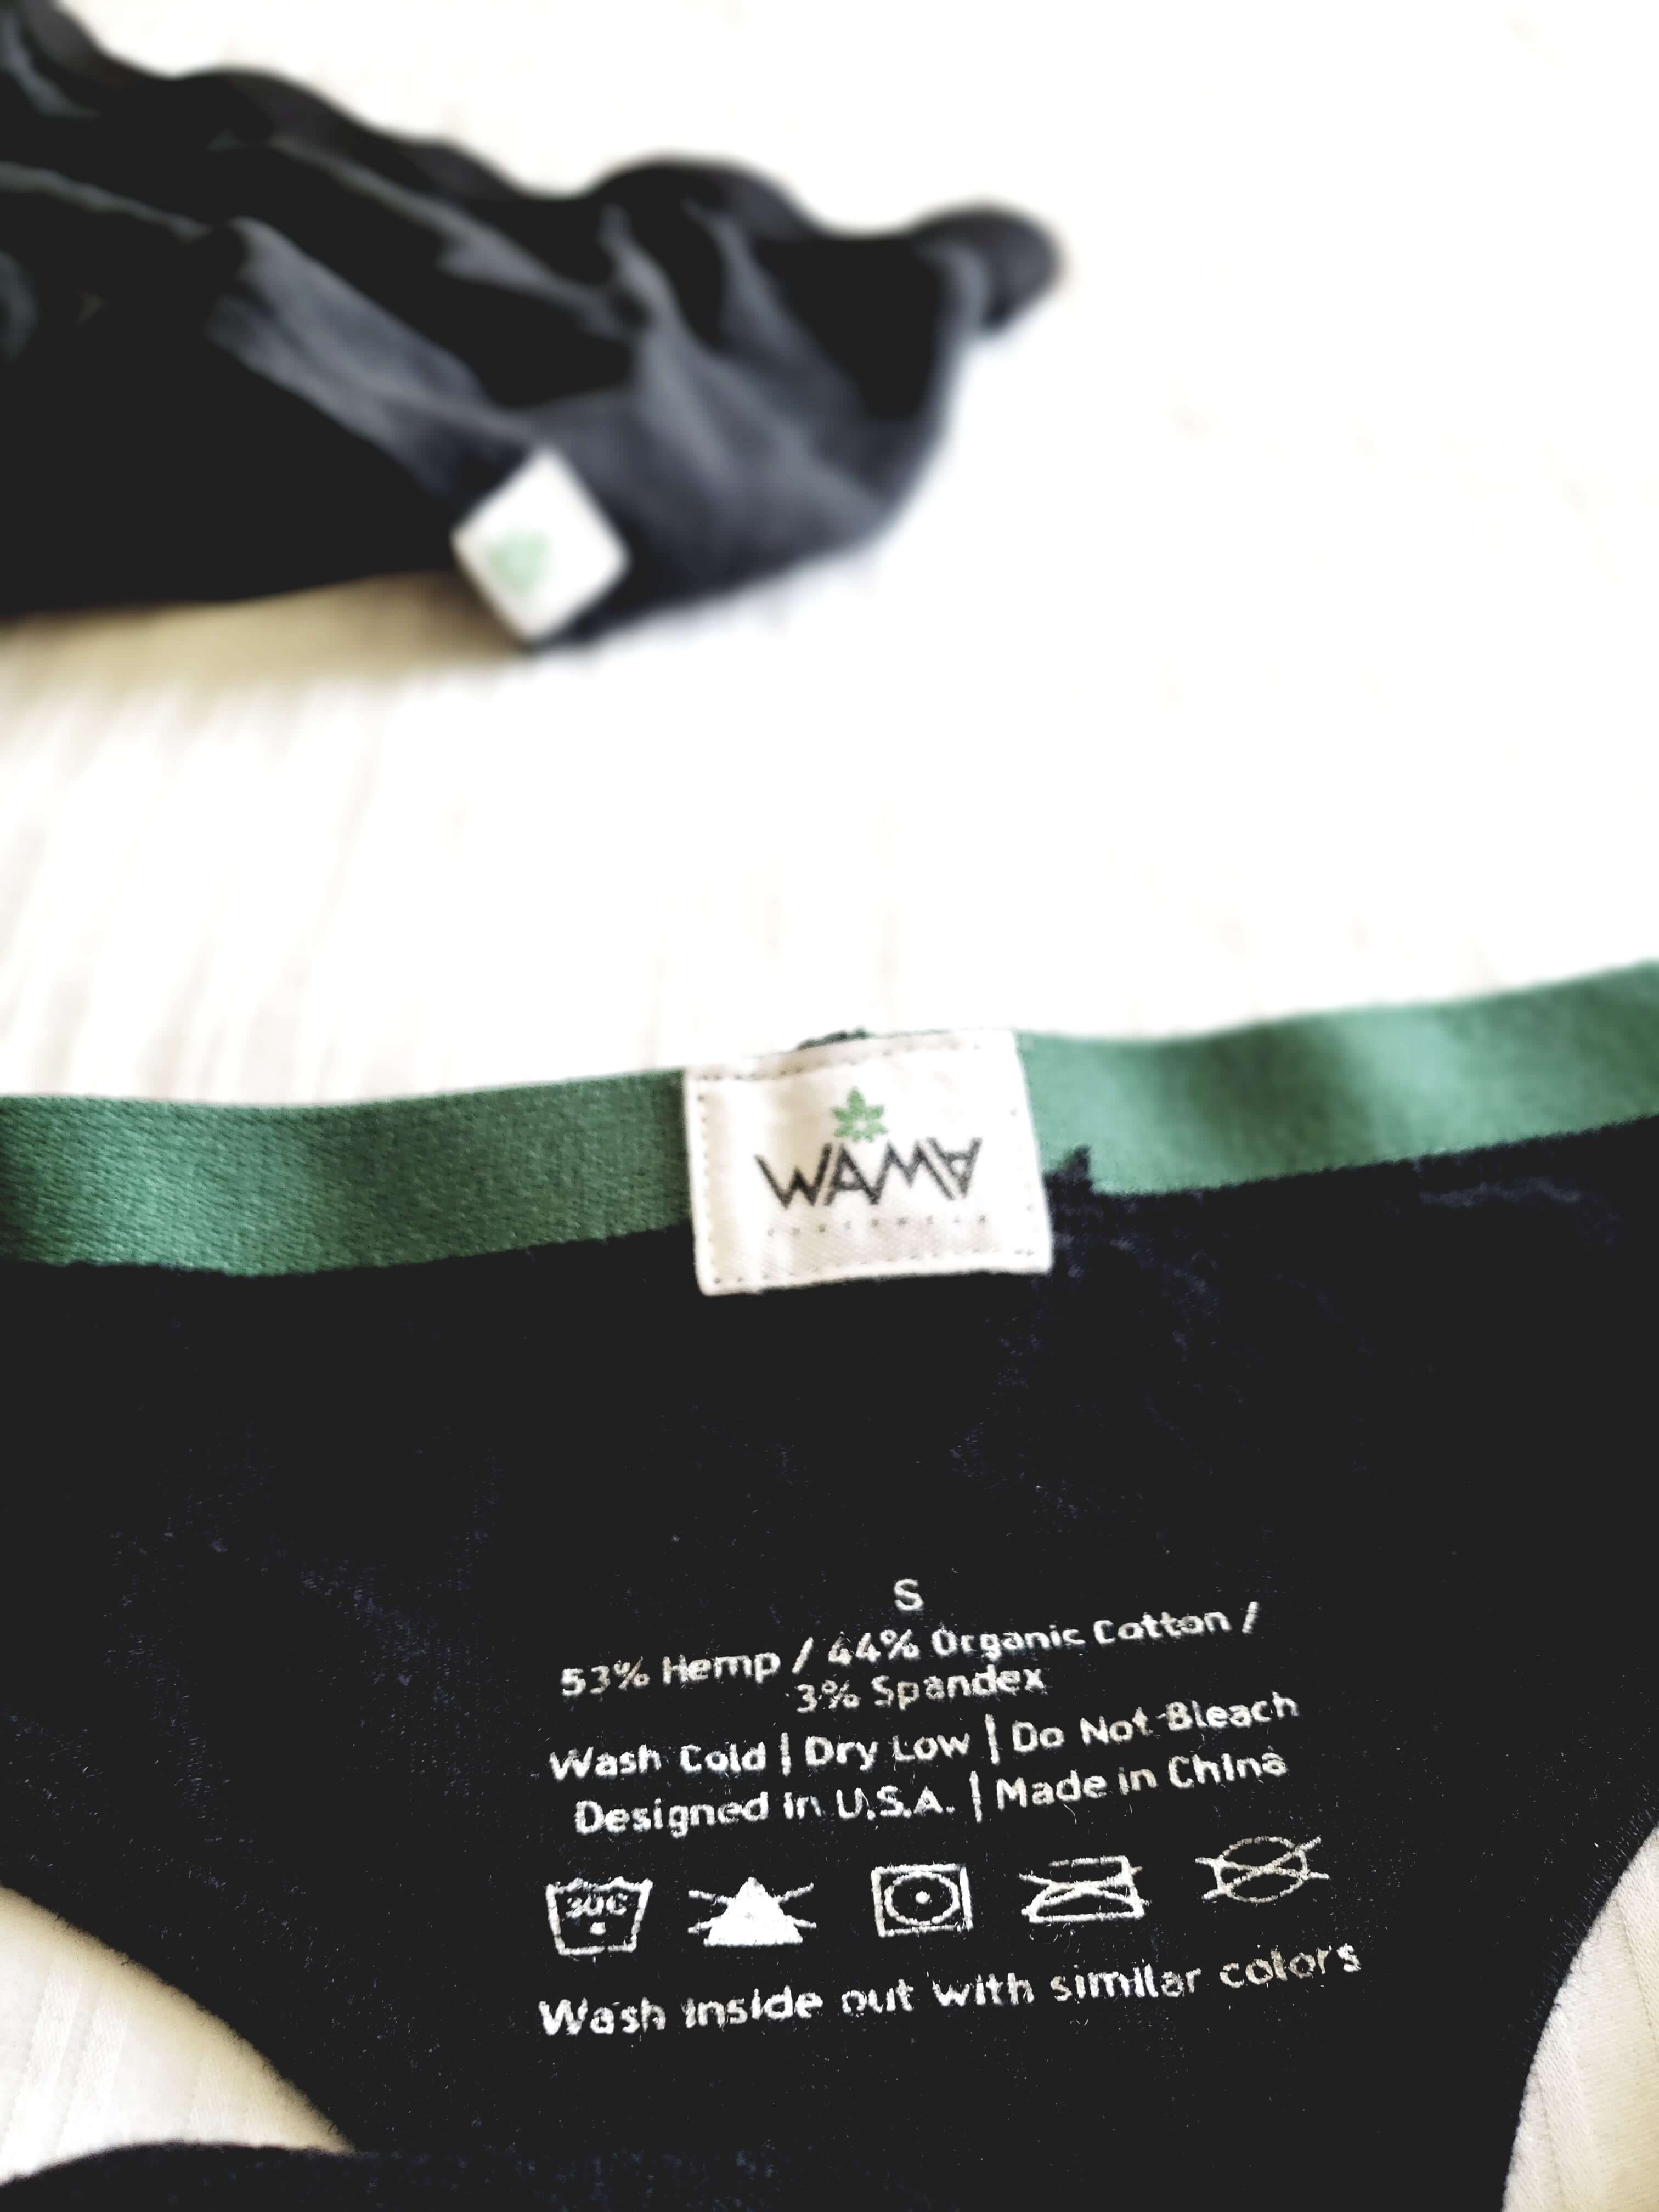 WAMA Underwear is the leading hemp underwear brand providing